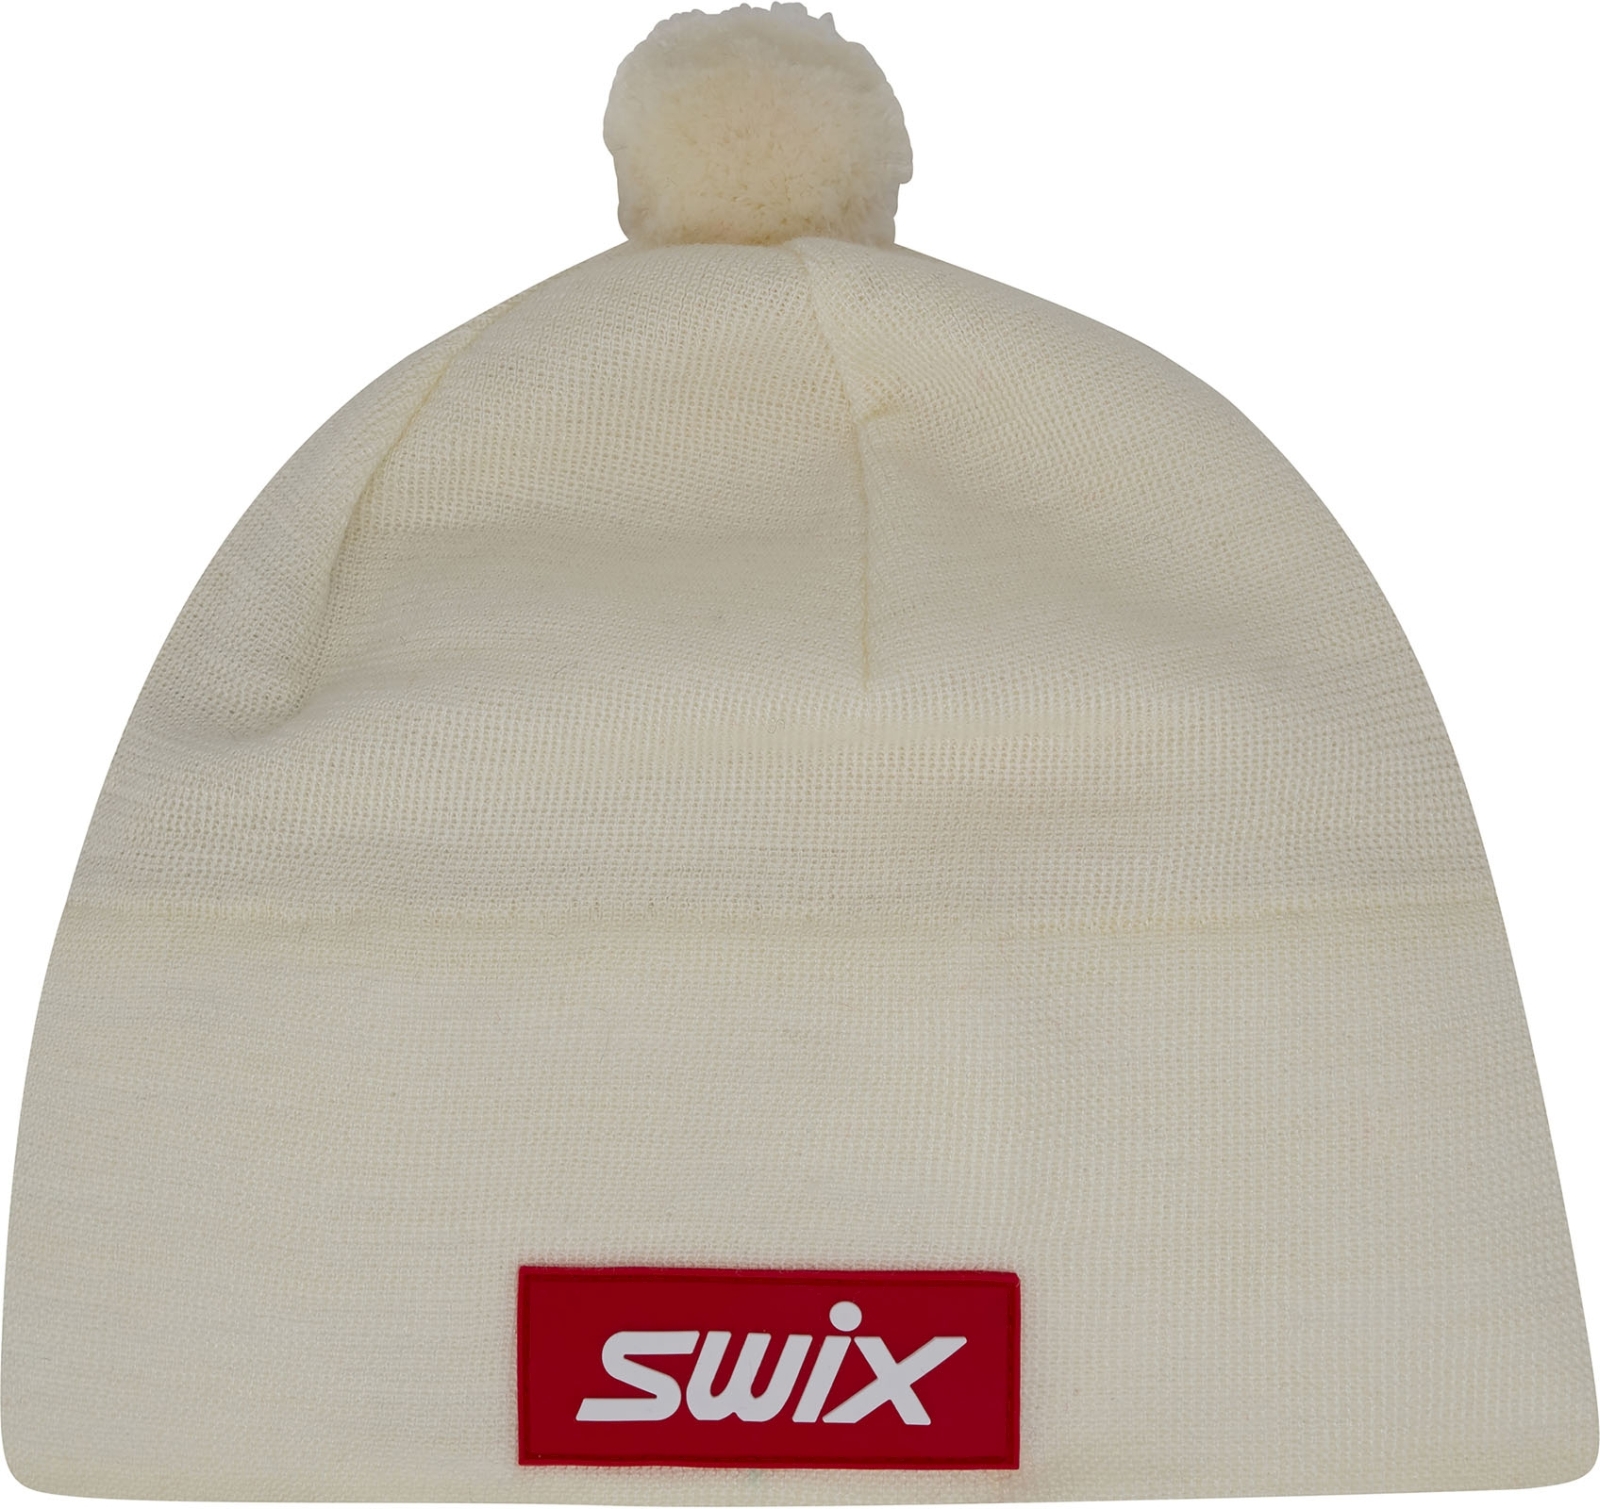 E-shop Swix Tradition hat - Snow White 60